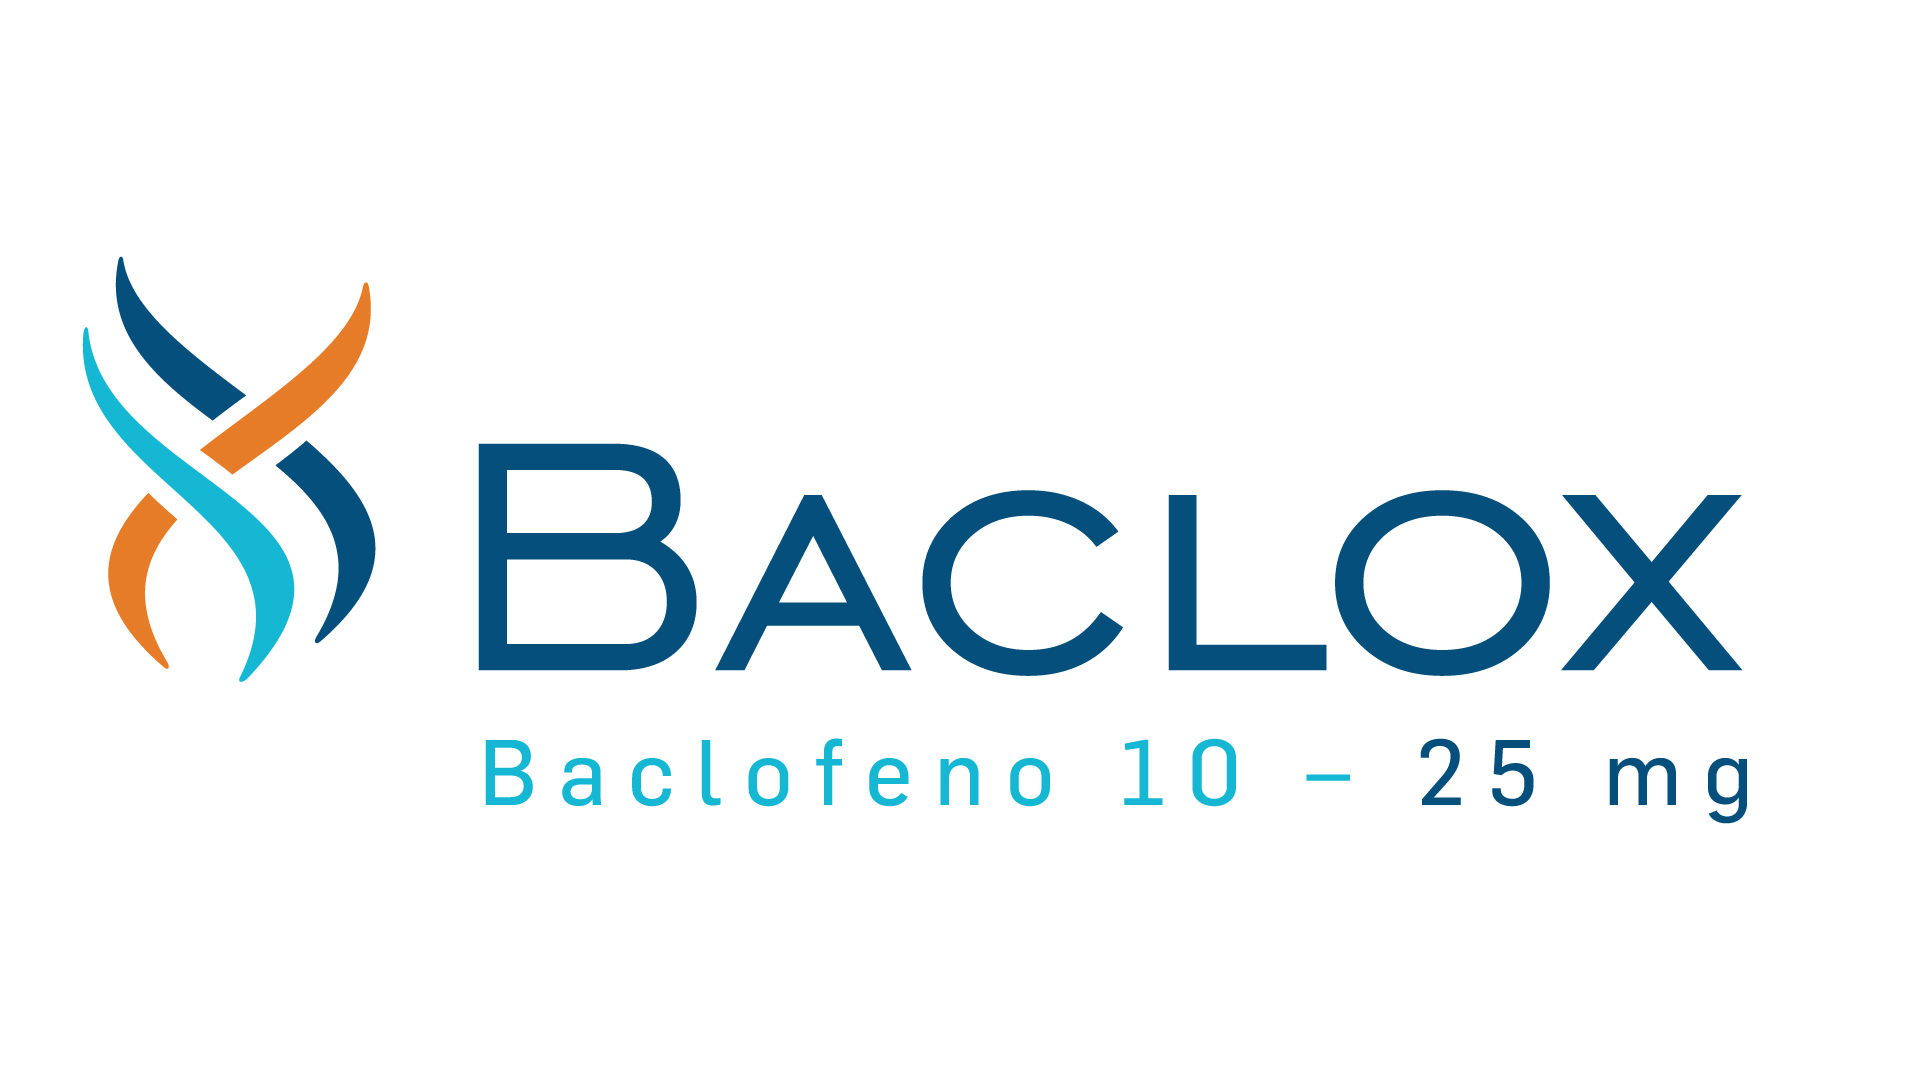 Baclox